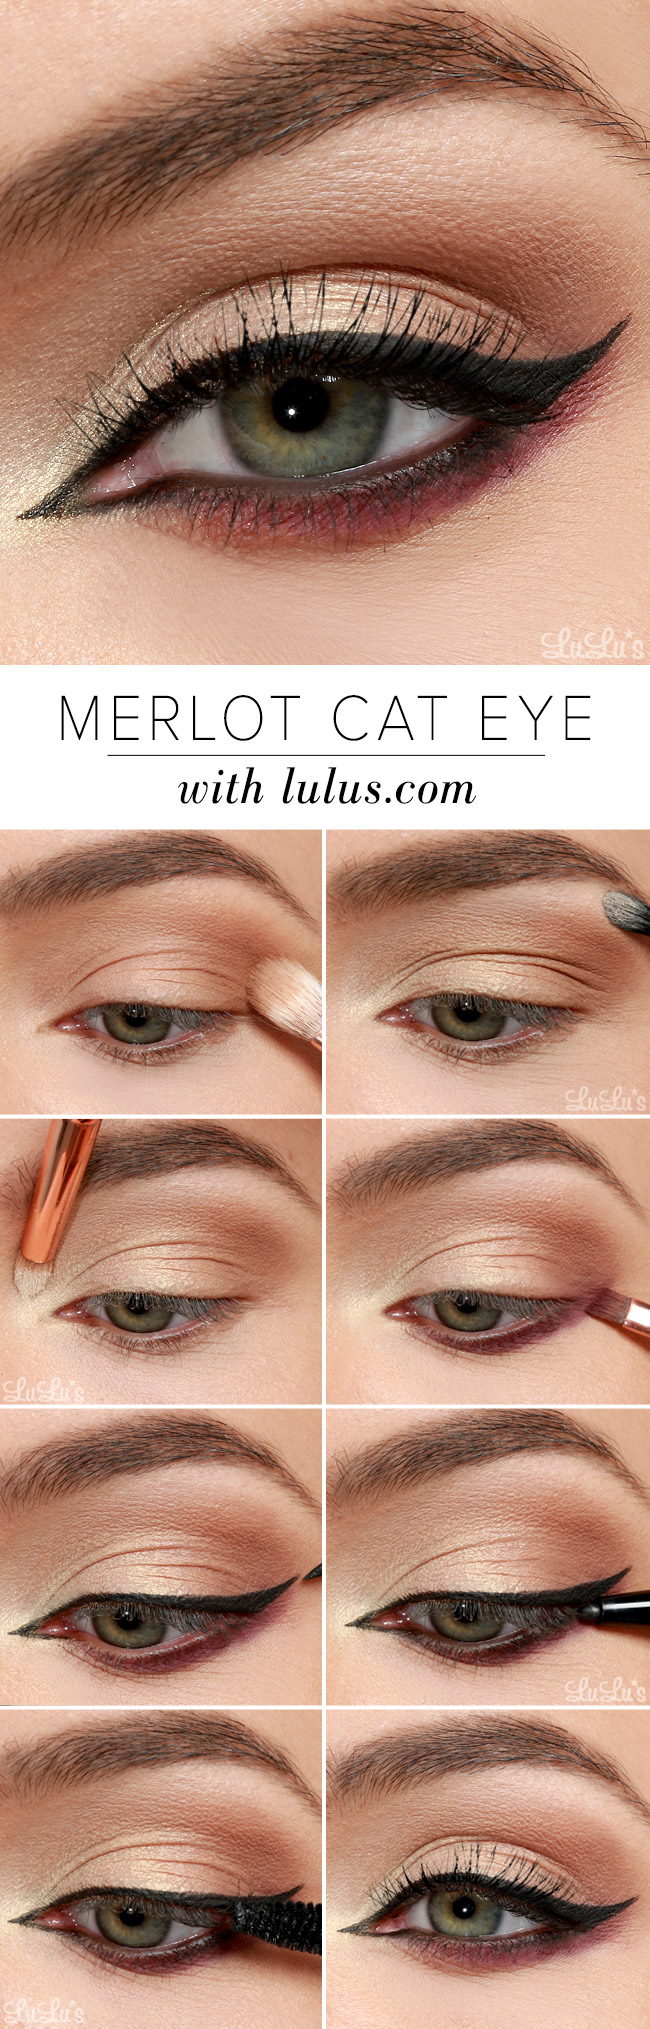 Halloween Cat Eye Makeup Lulus How To Merlot Cat Eye Makeup Tutorial Lulus Fashion Blog